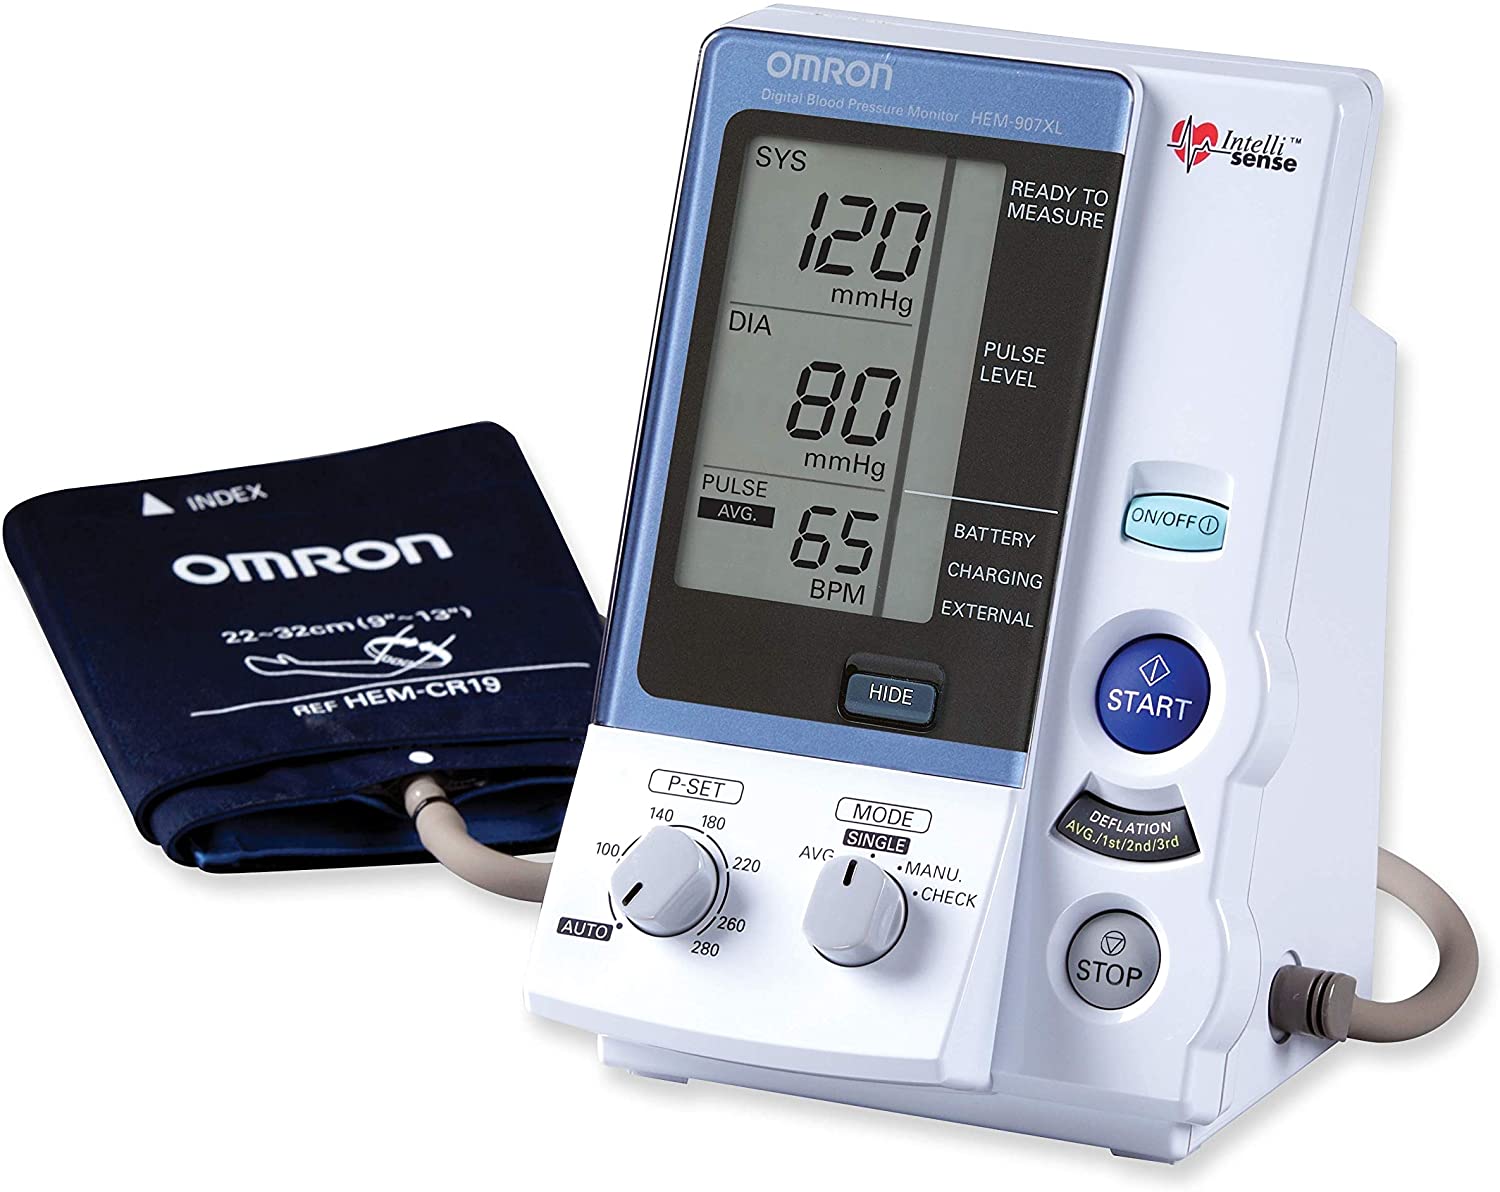 IntelliSense Blood Pressure Monitor HEM-907XL User Manual